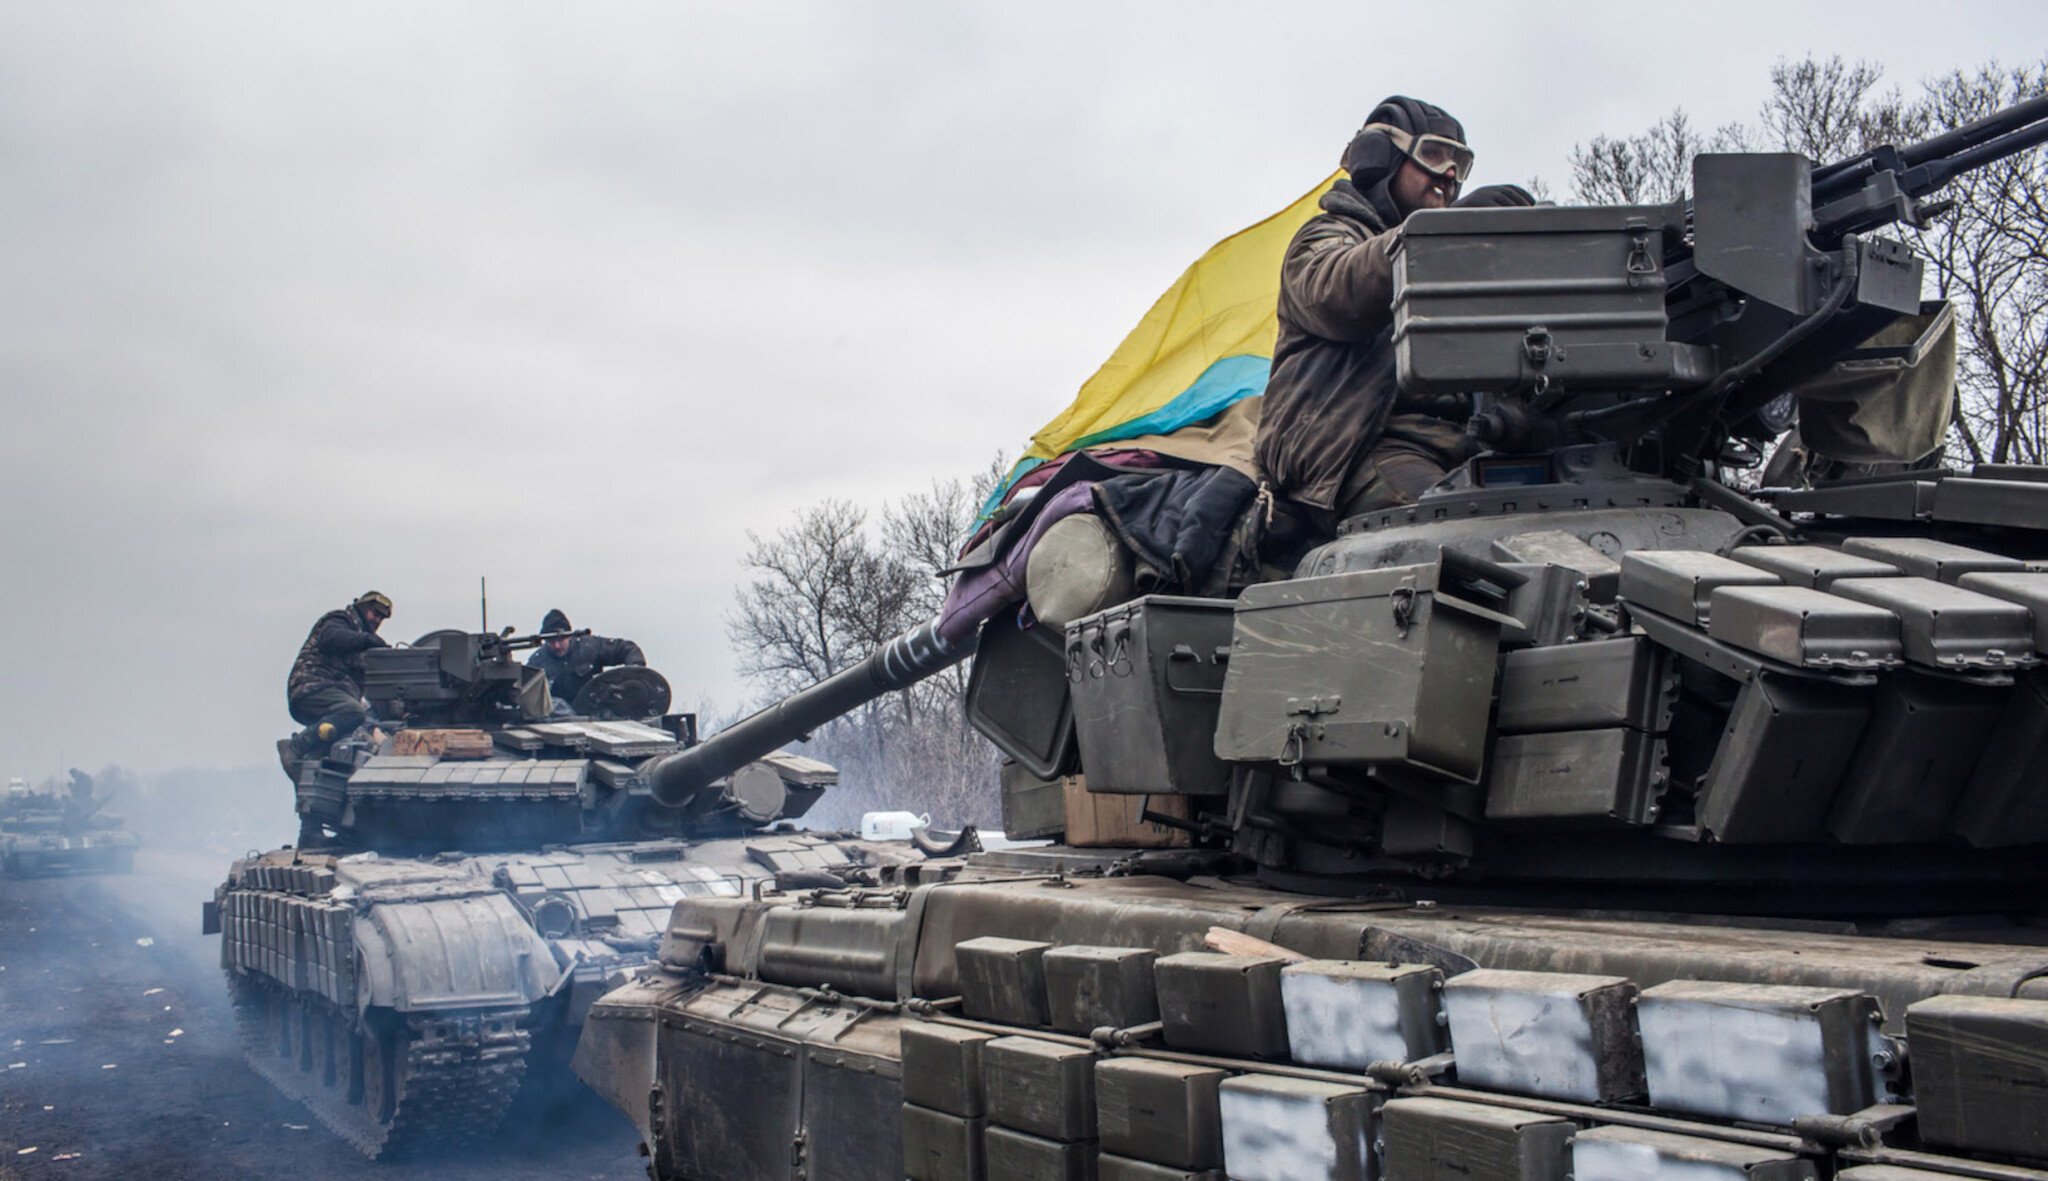 Dodalo Česko Ukrajině tanky a bojová vozidla? Armáda to nepotvrdila